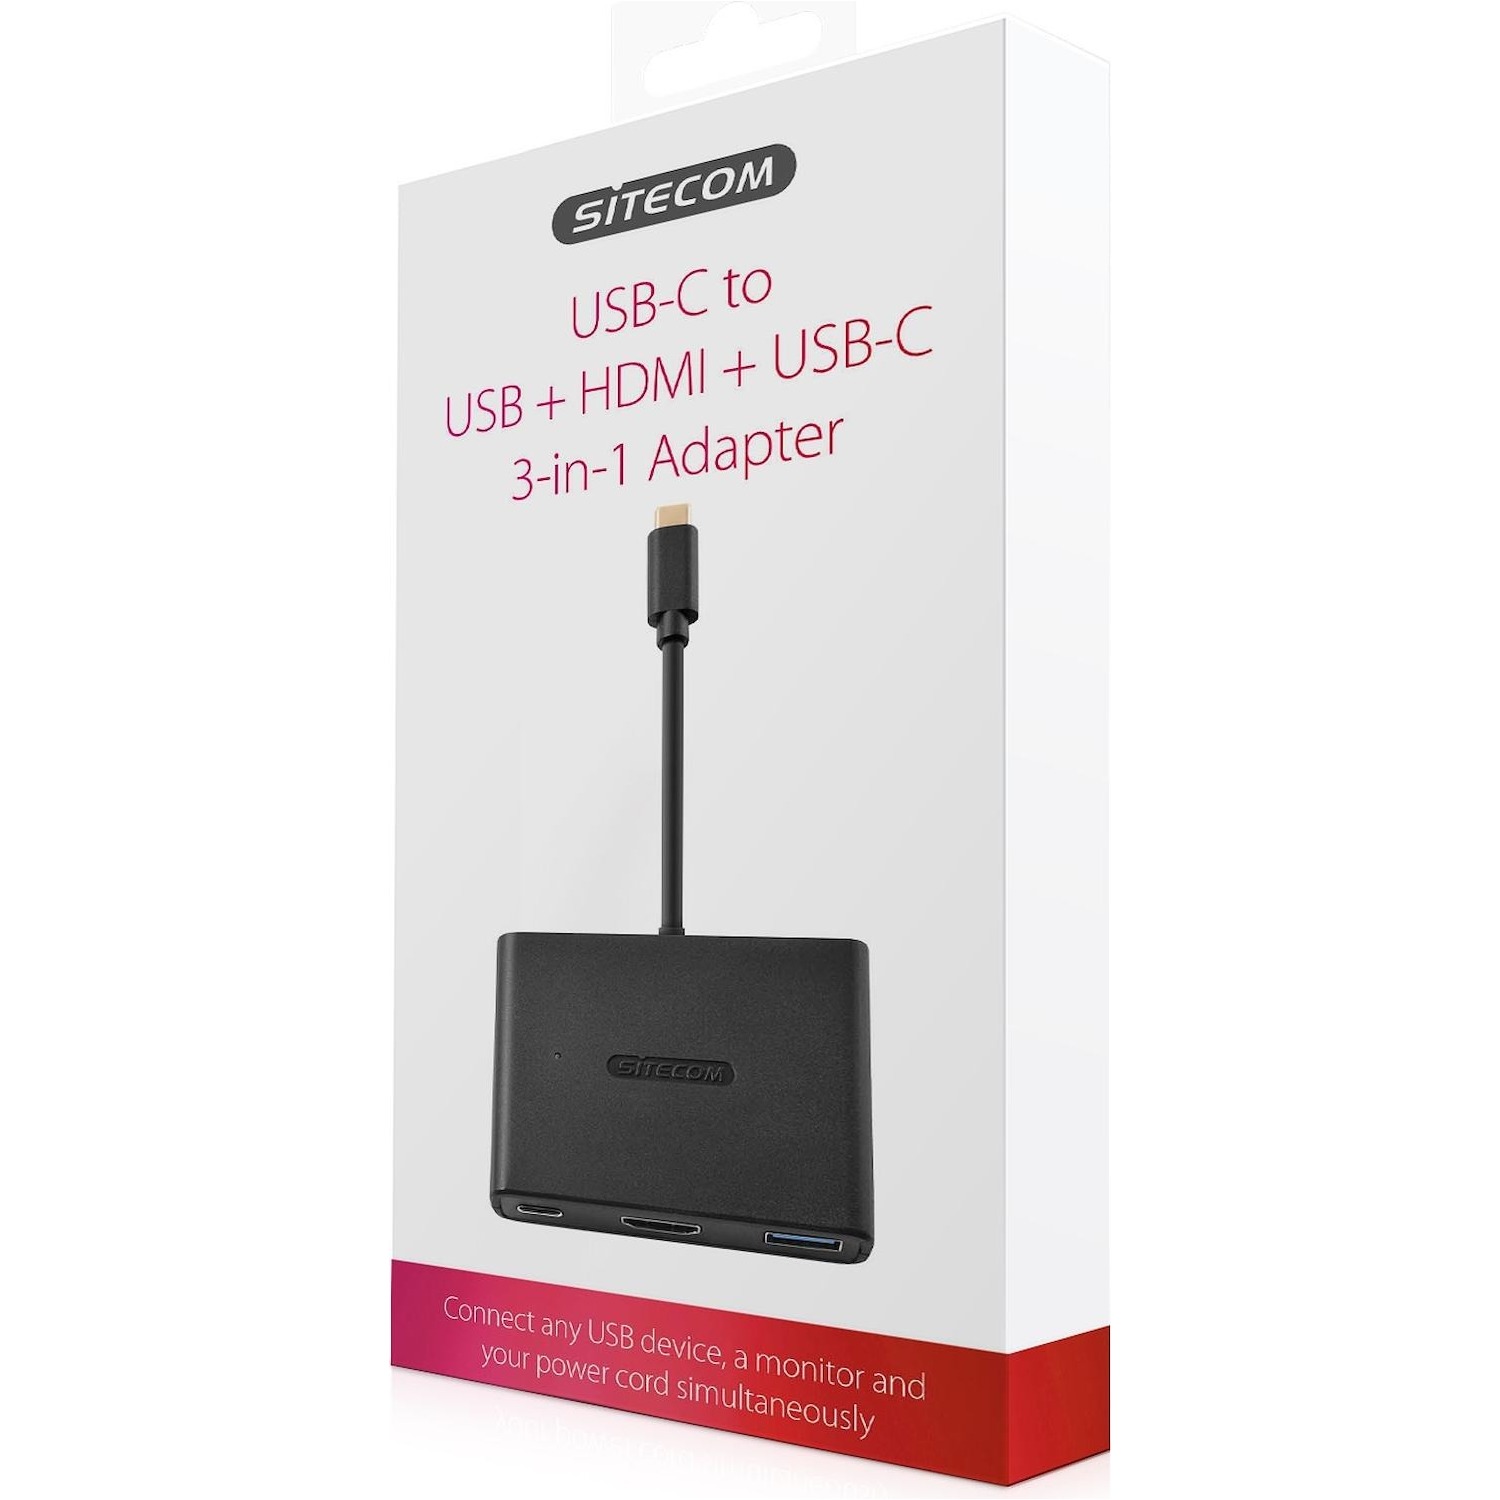 Immagine per Adattatore Sitecom da USB-C a USB HDMI con USB-C  3in1 da DIMOStore